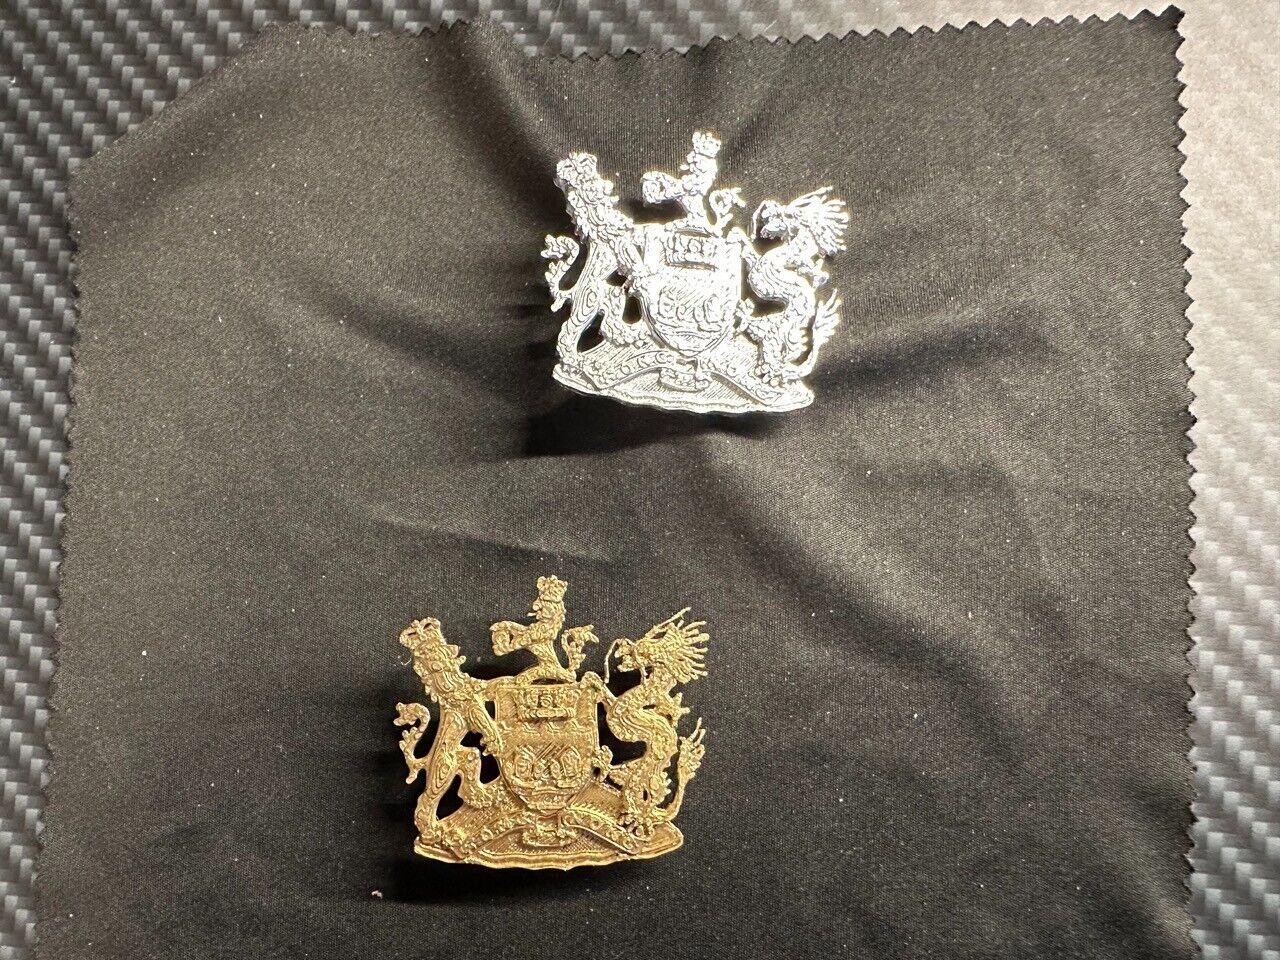 Two Set of Hong Kong British Emblem Pin 2 inches in size